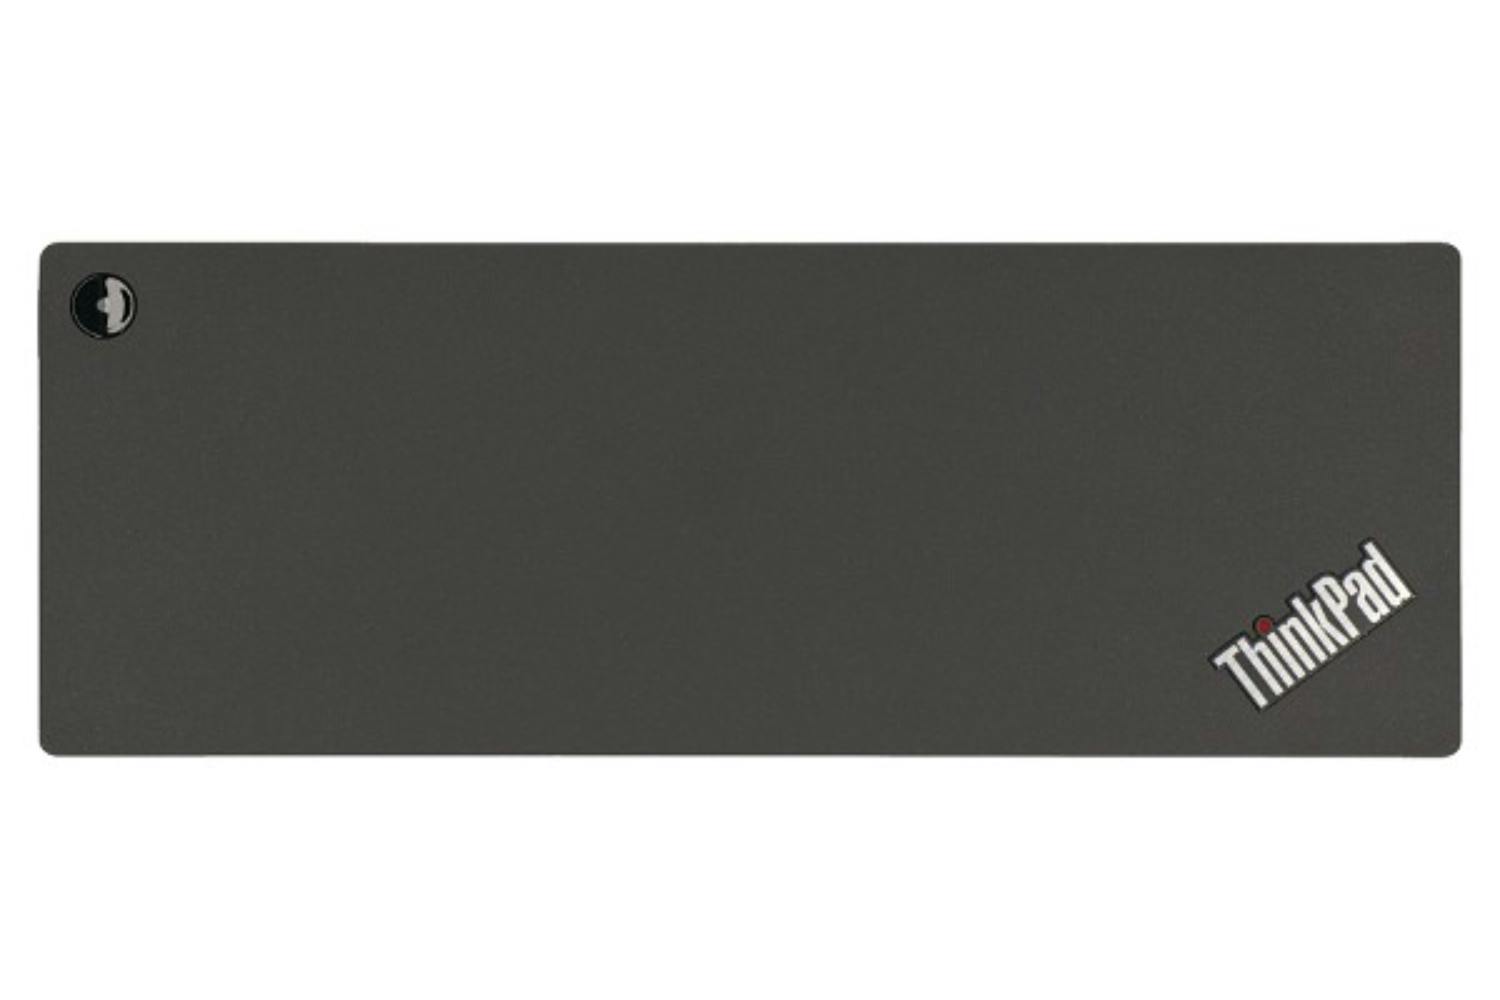 Lenovo 40AN0135IS 135W ThinkPad Thunderbolt 3 Dock